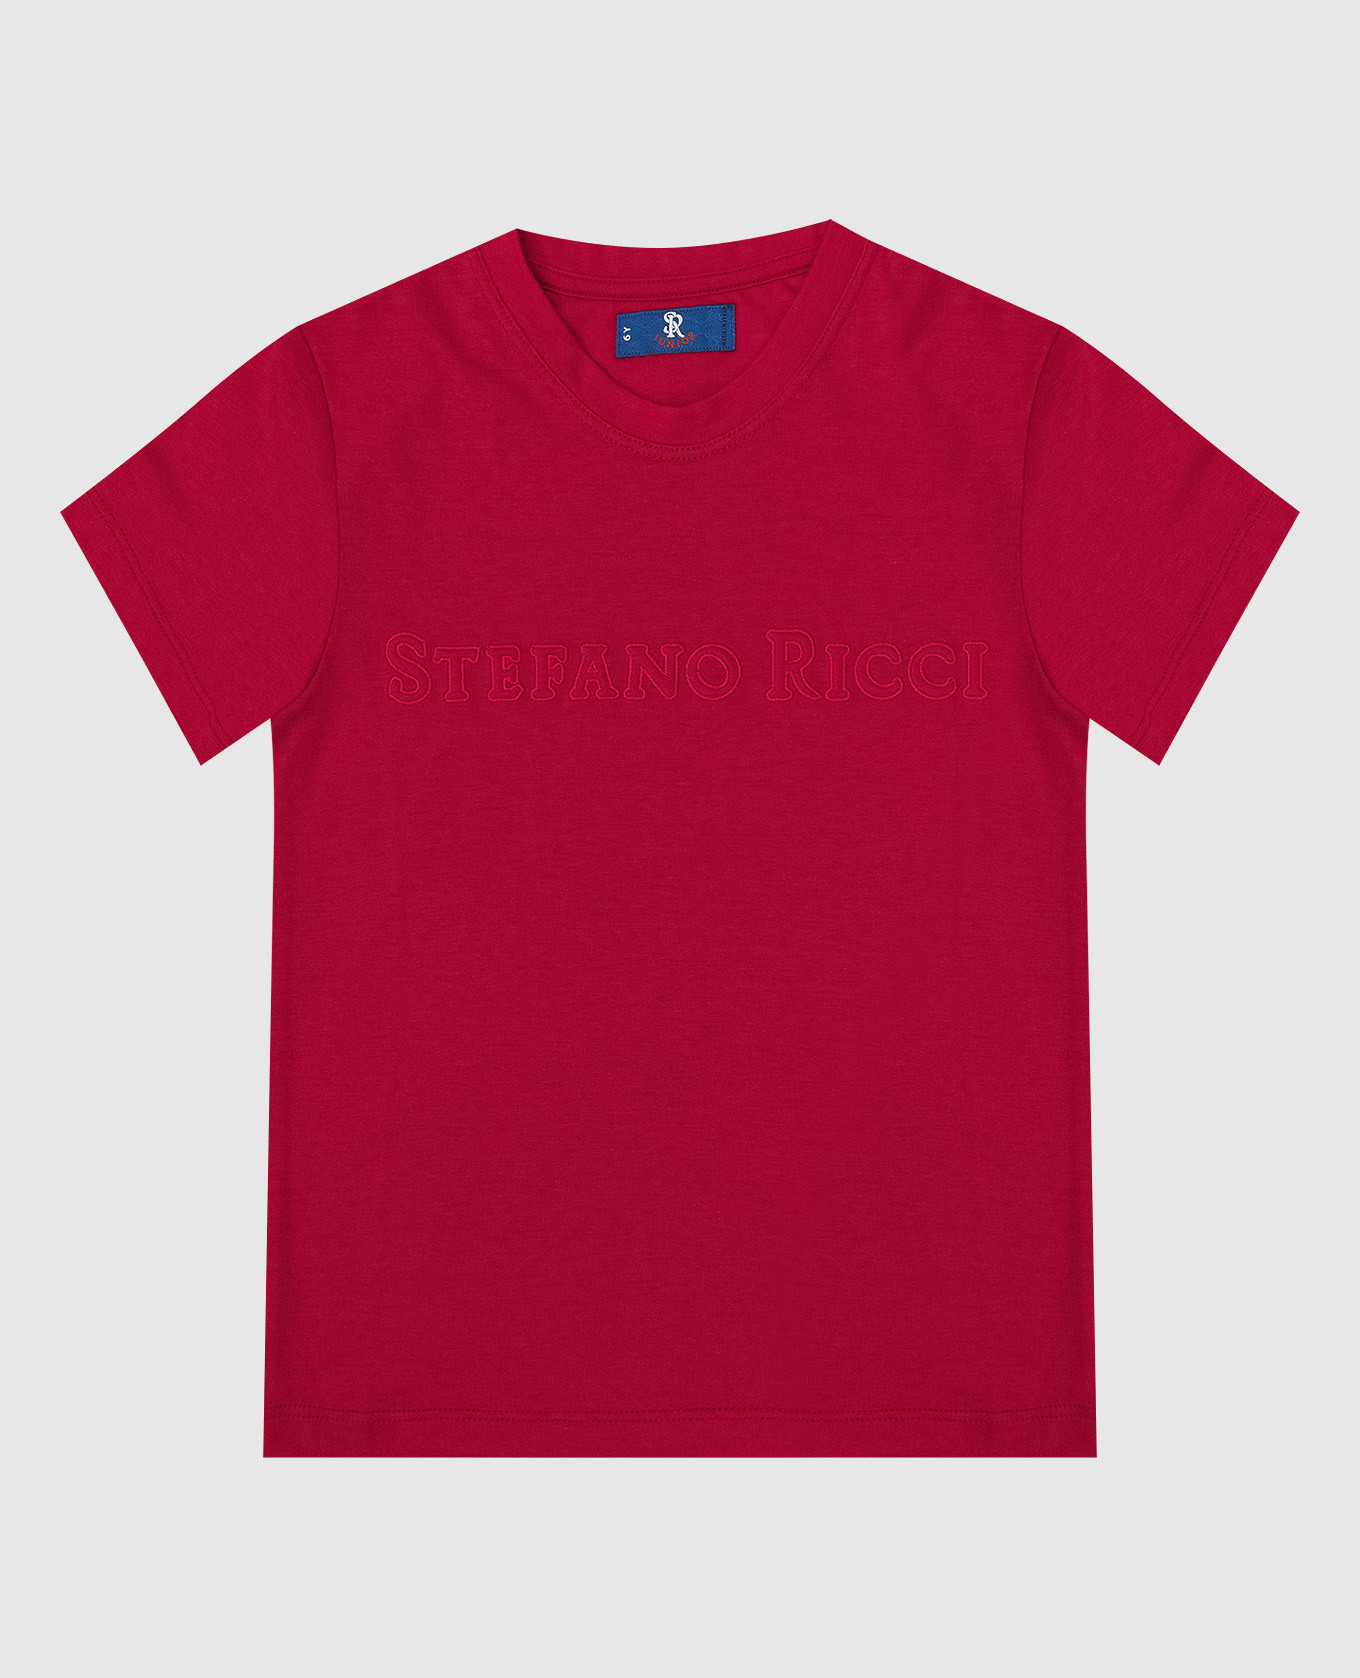 Дитяча червона футболка з вишивкою емблеми